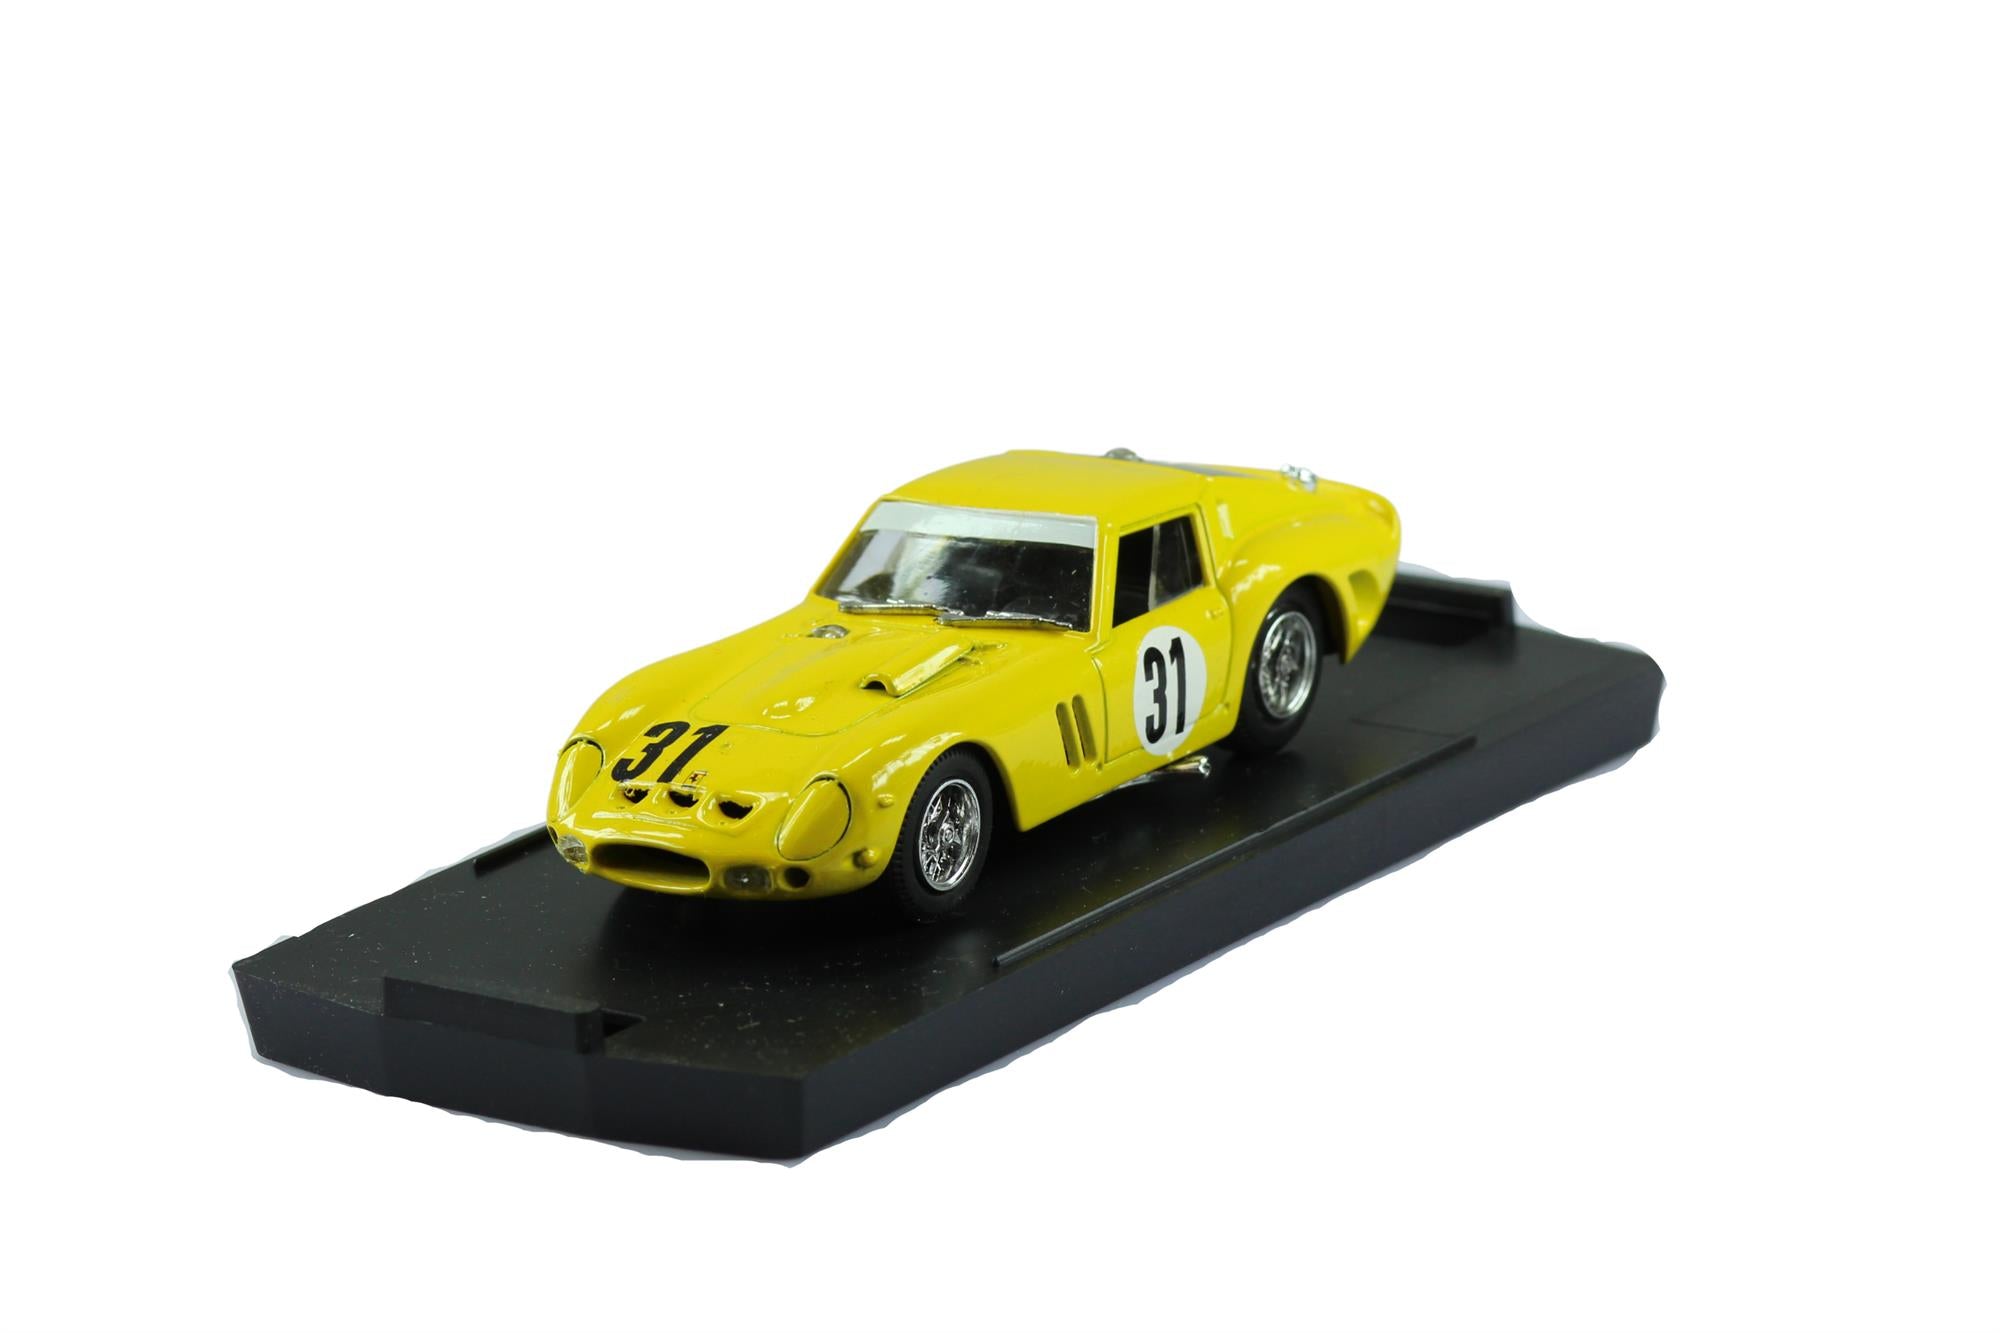 Bang Models - 1:43 Scale Diecast Ferrari 250 GTO "Spa 1965" Yellow #31 - Langlois van Ophem - Toptoys2u